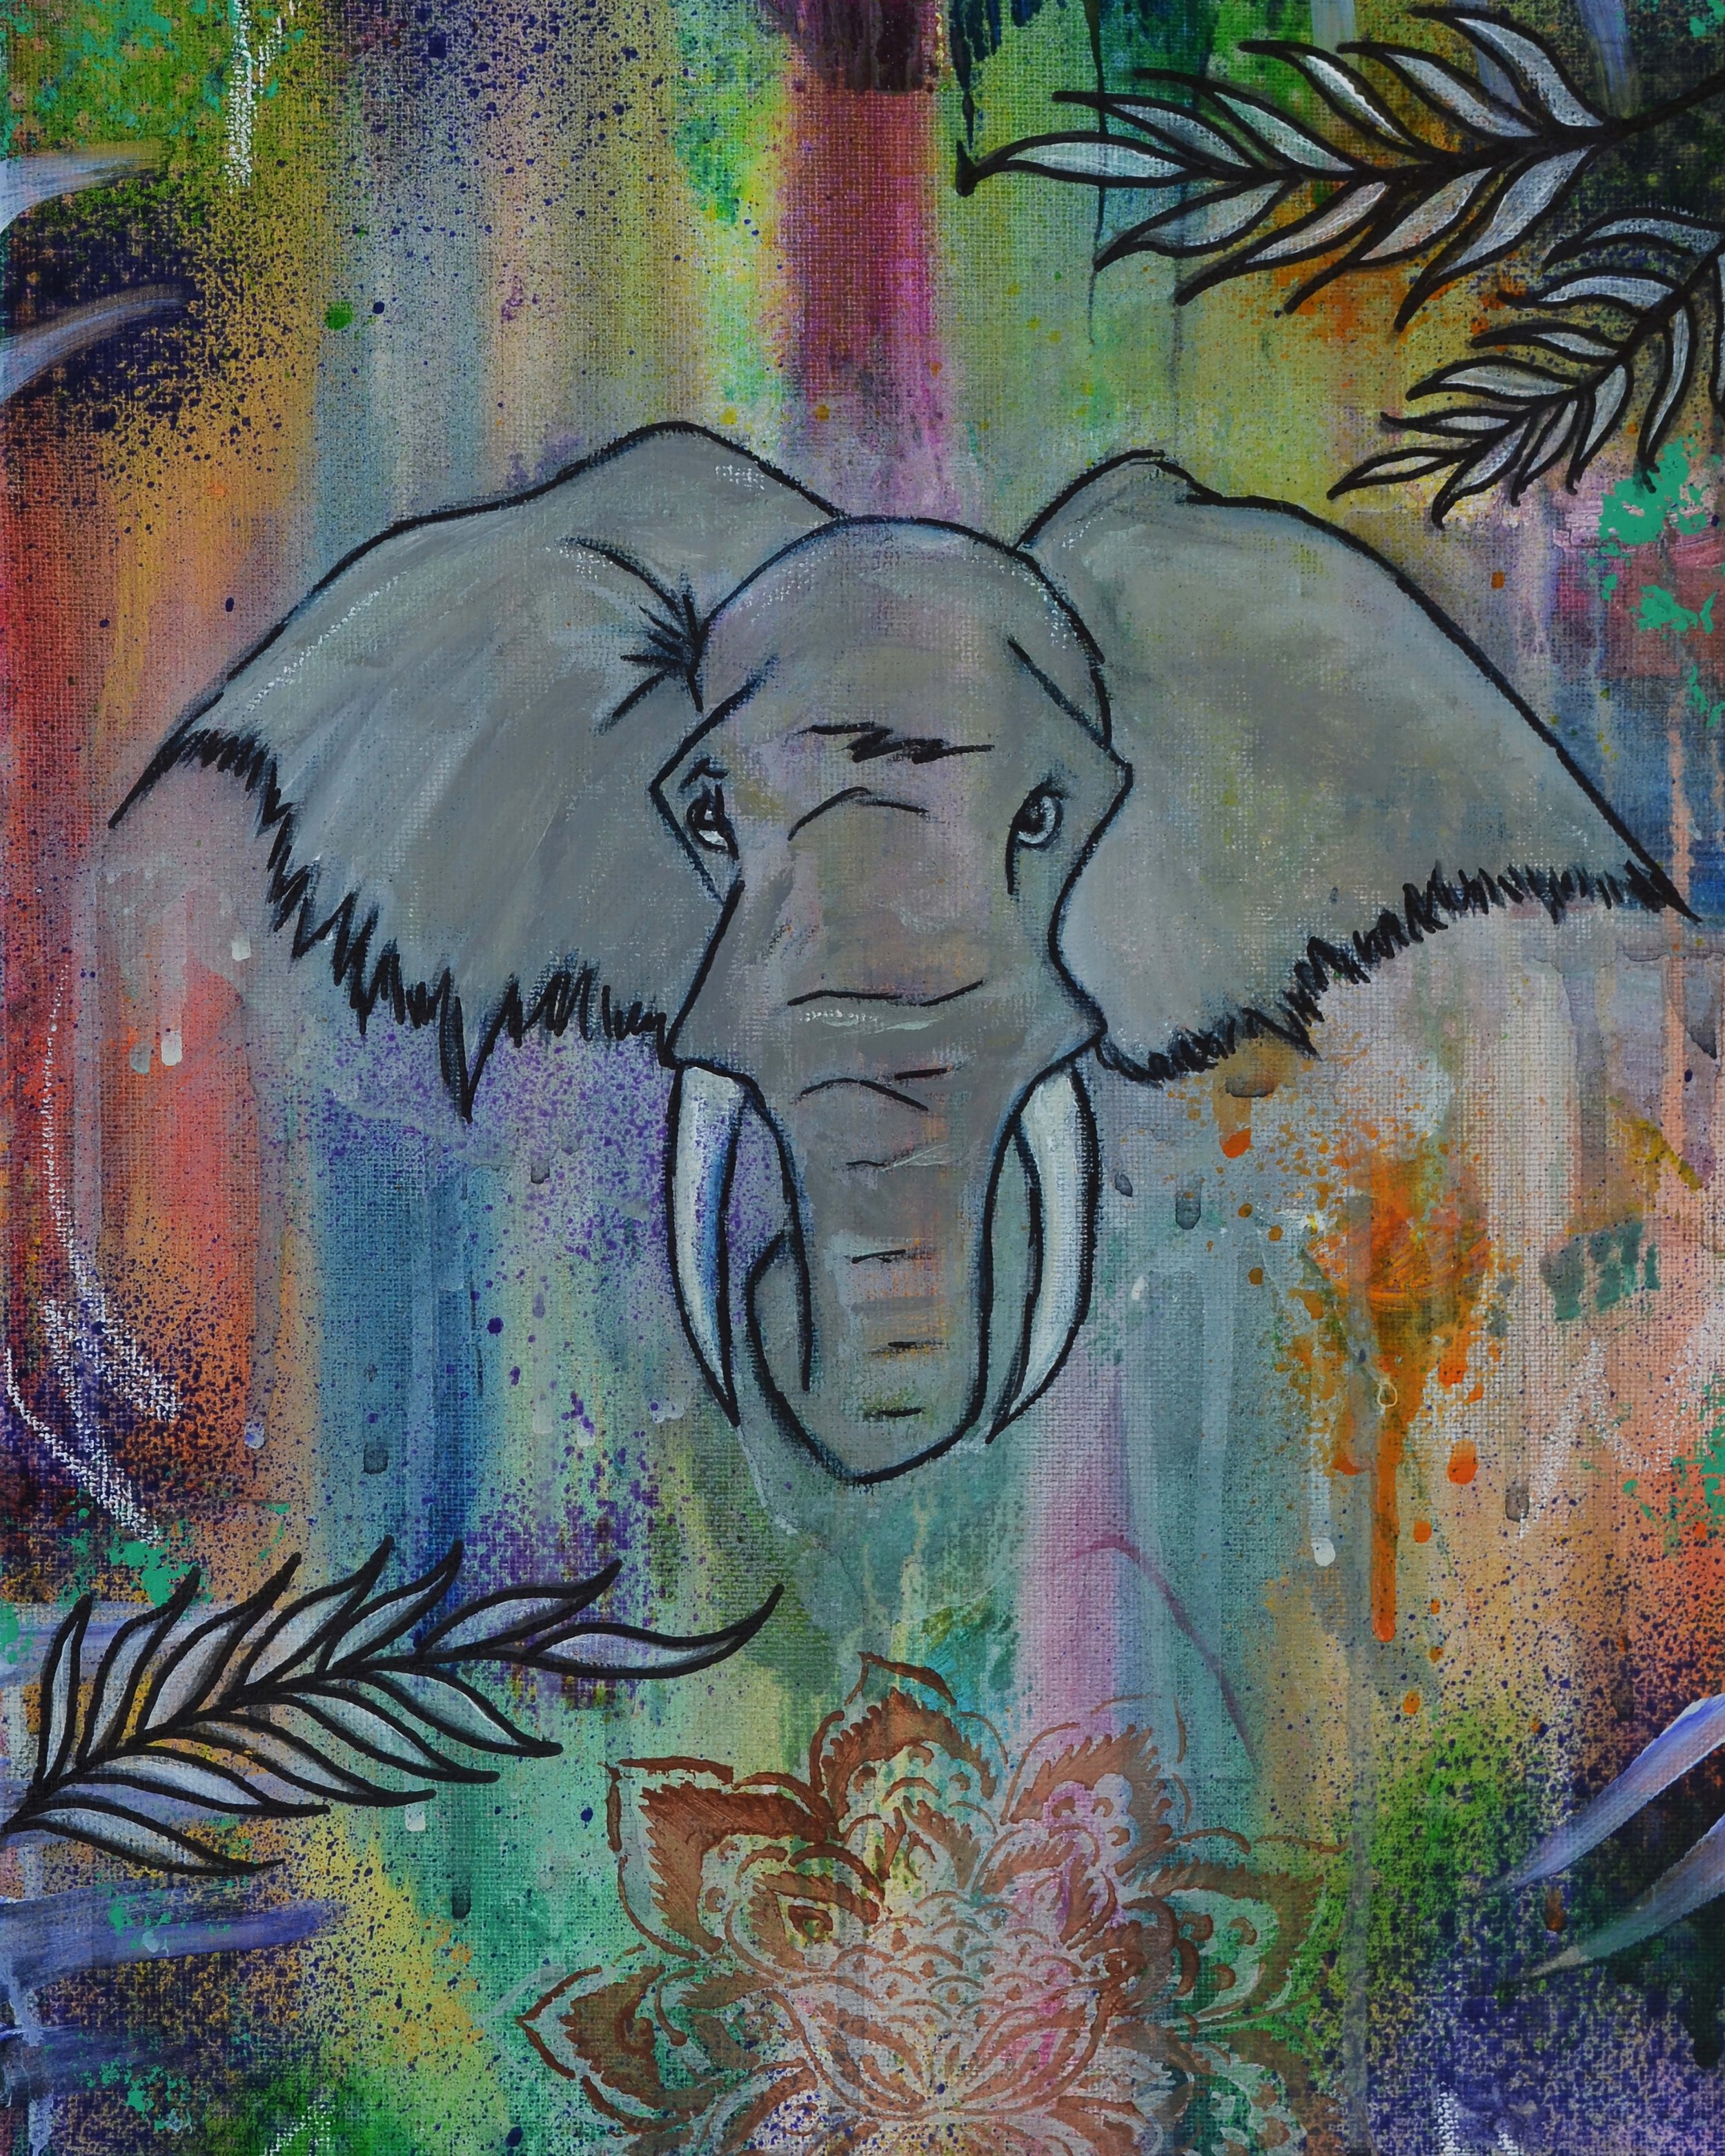 Elephant - 8x10 - Animal Magic - 2022 painting.jpg